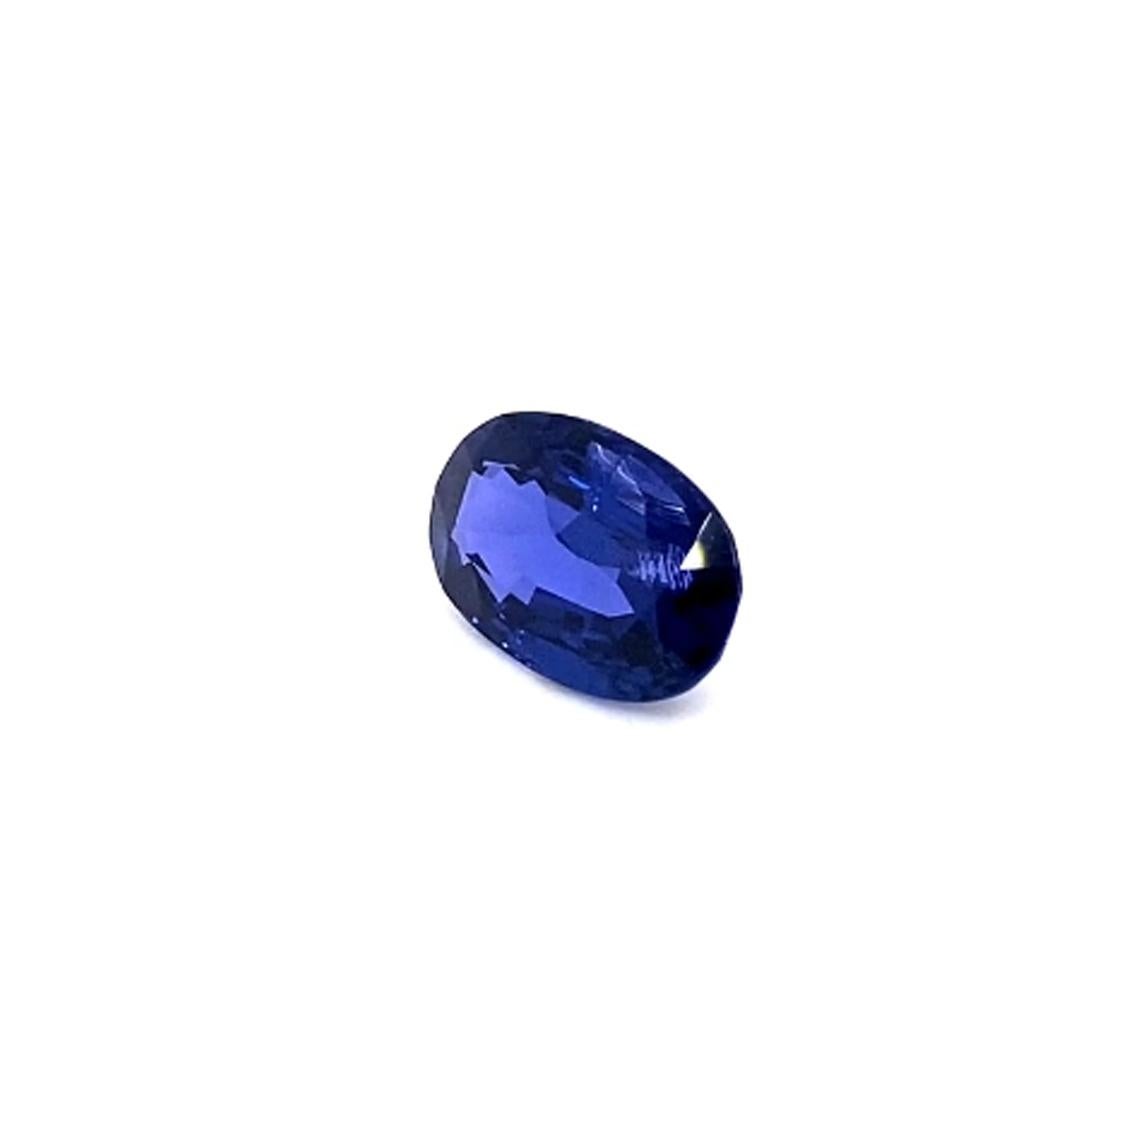 Bellerophon Gemlab Certified 4.34ct Blue Sapphire Natural Gemstone For Sale 1